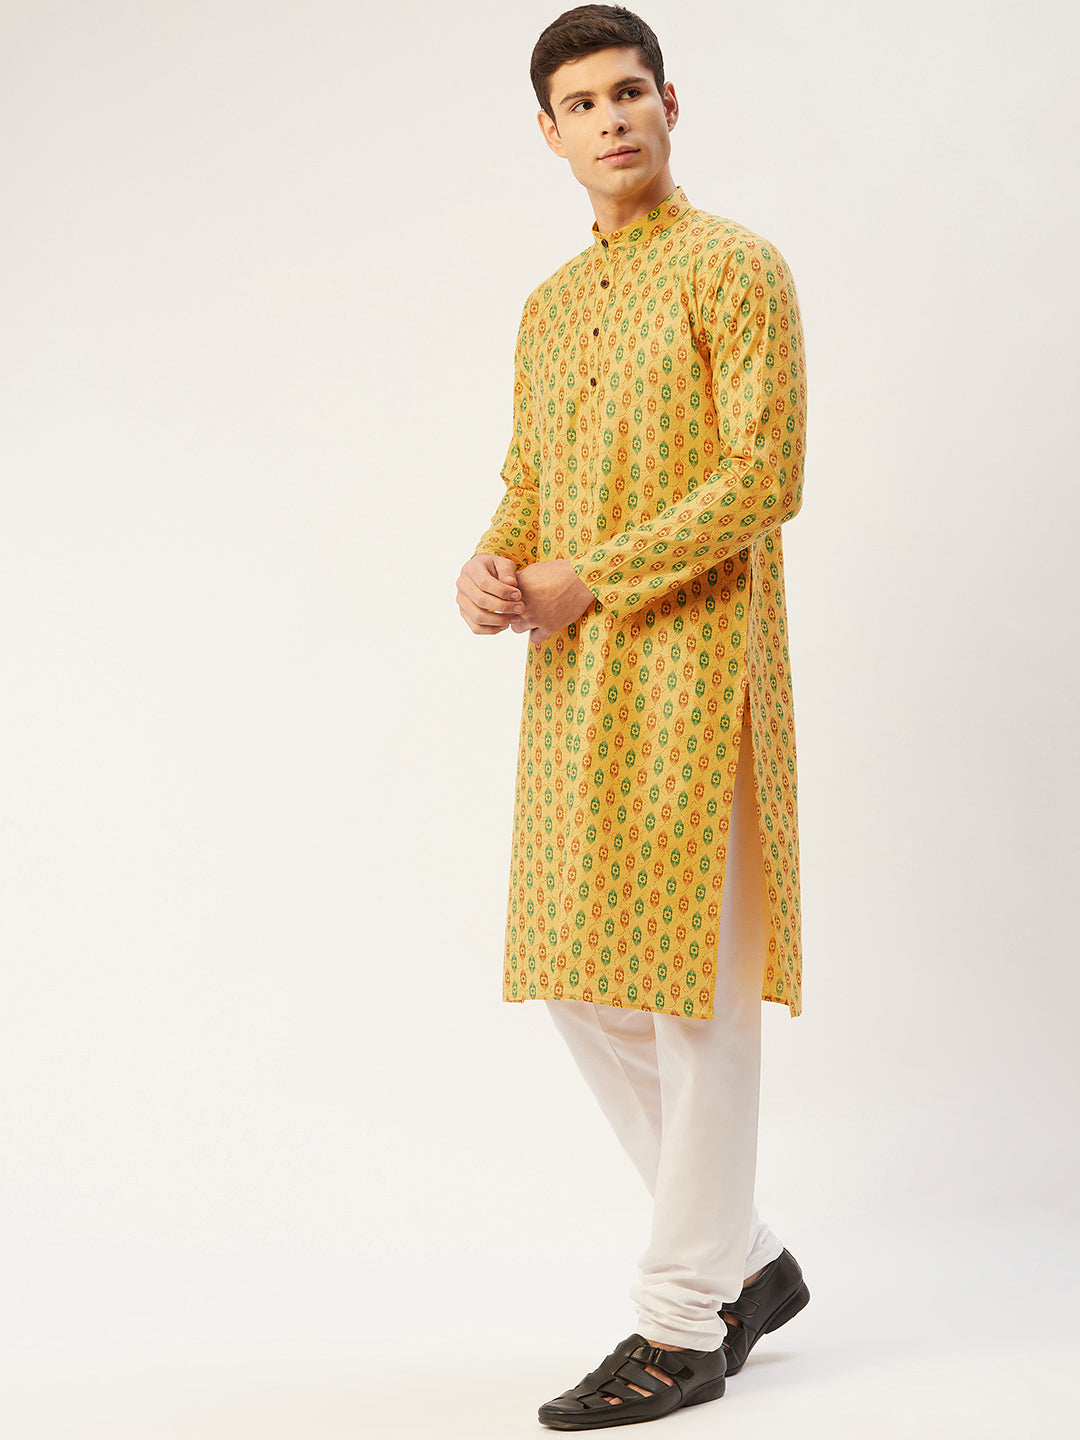 Jompers Men's Mustard Cotton Ikat printed kurta Pyjama Set